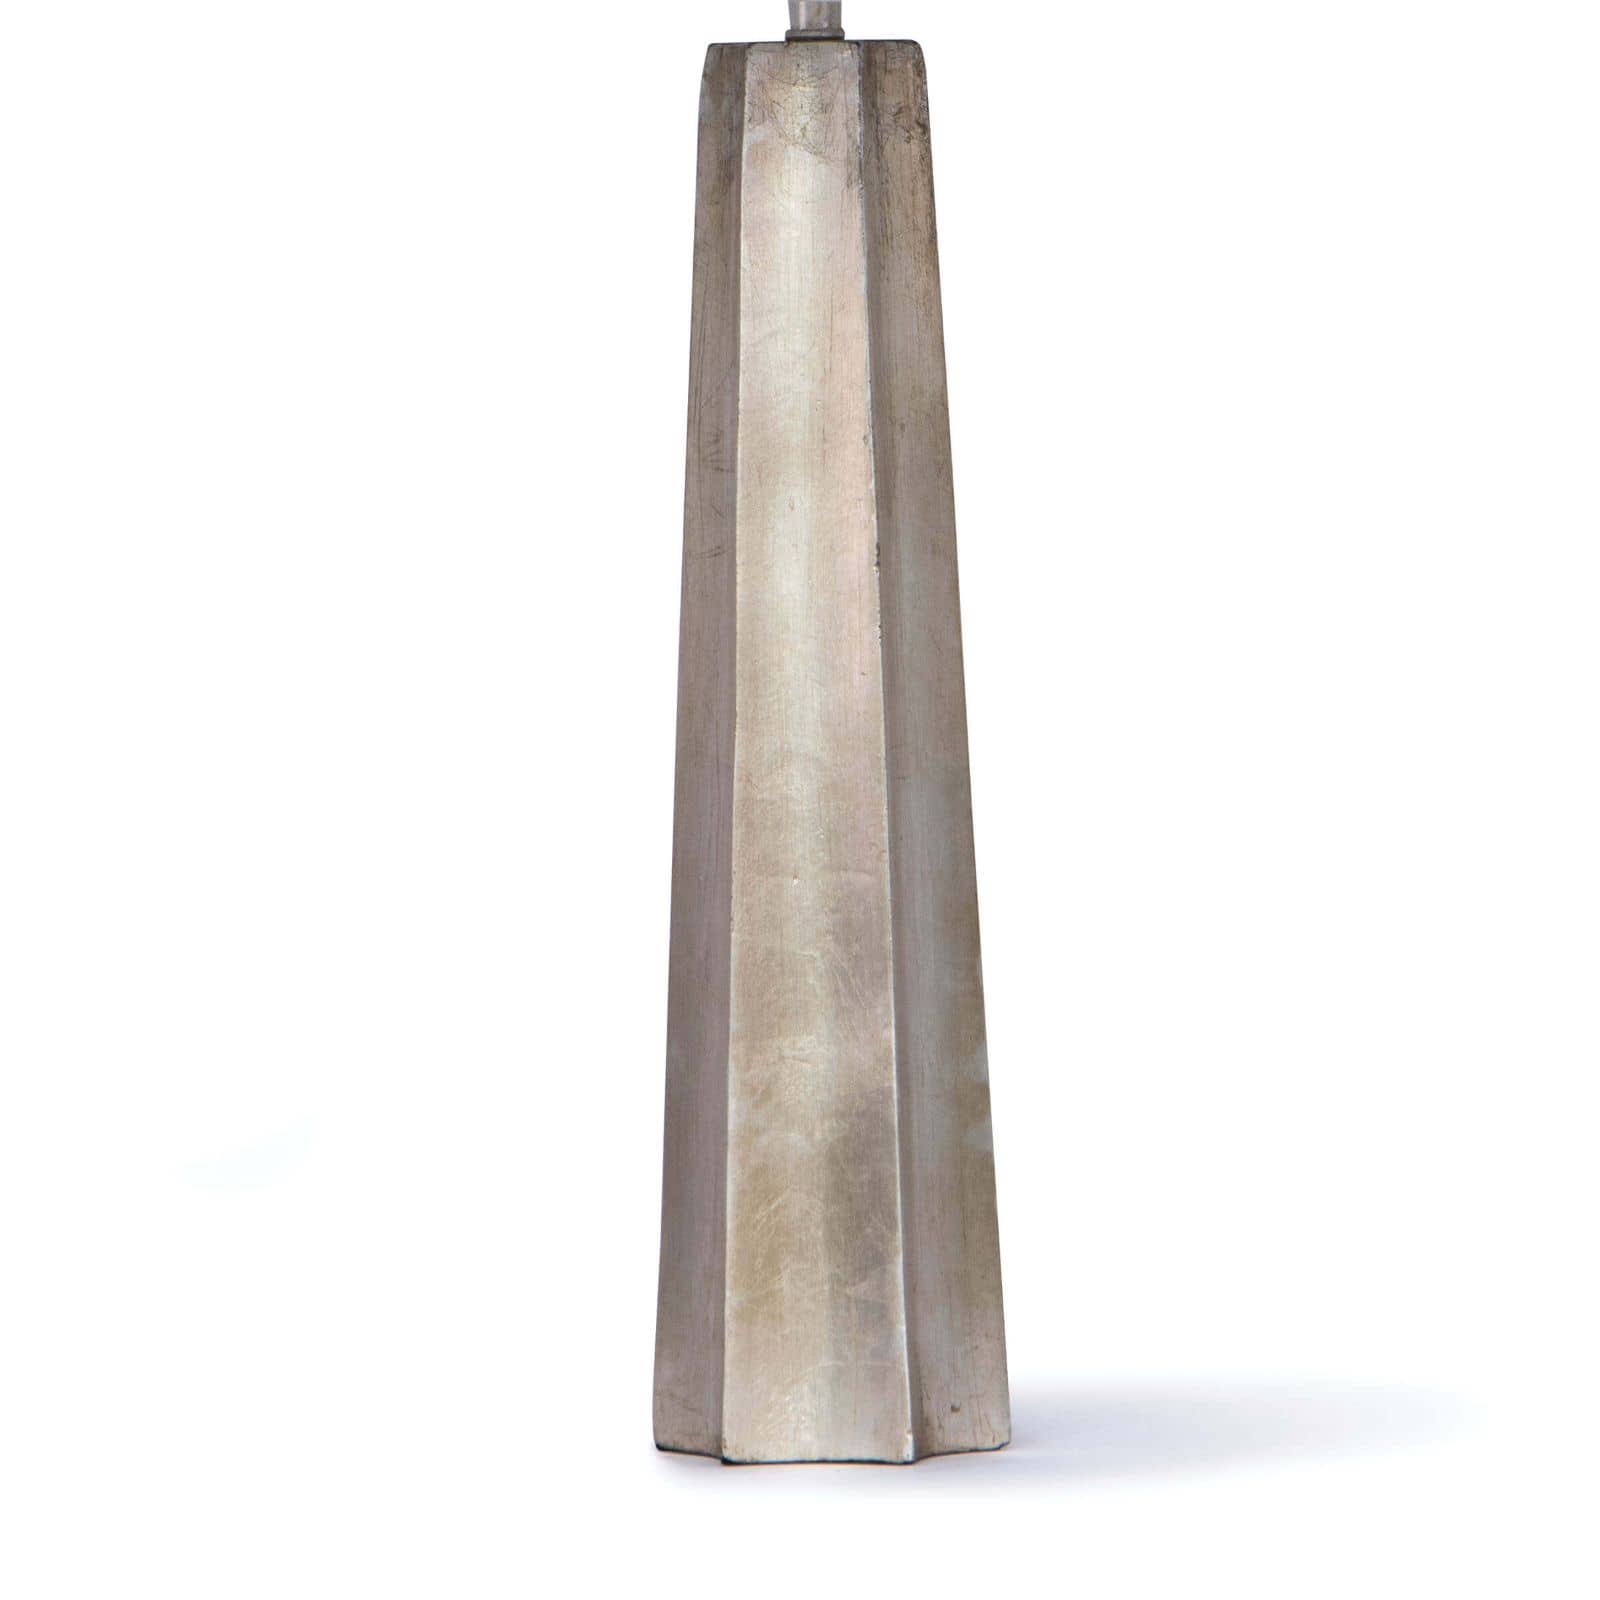 Regina Andrew Celine Table Lamp (Ambered Silver Leaf)